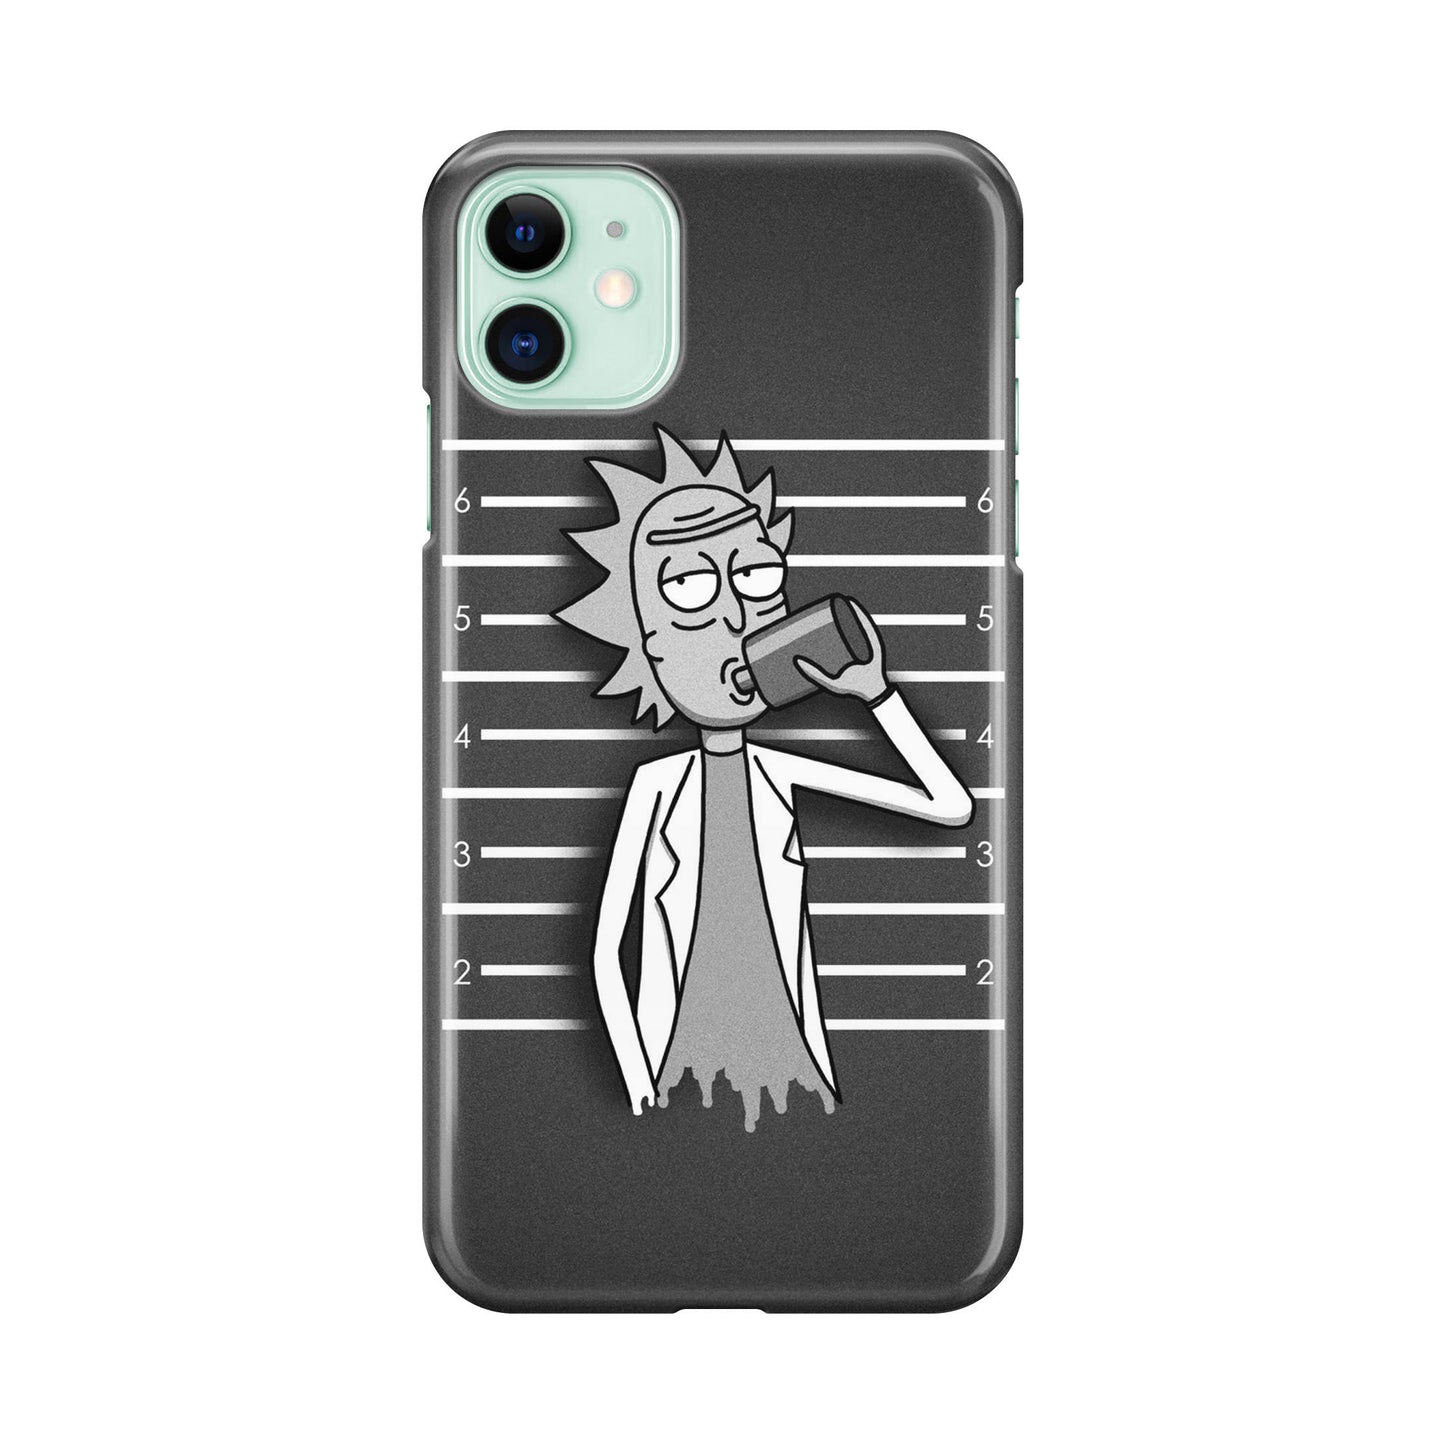 Rick Criminal Photoshoot iPhone 12 mini Case